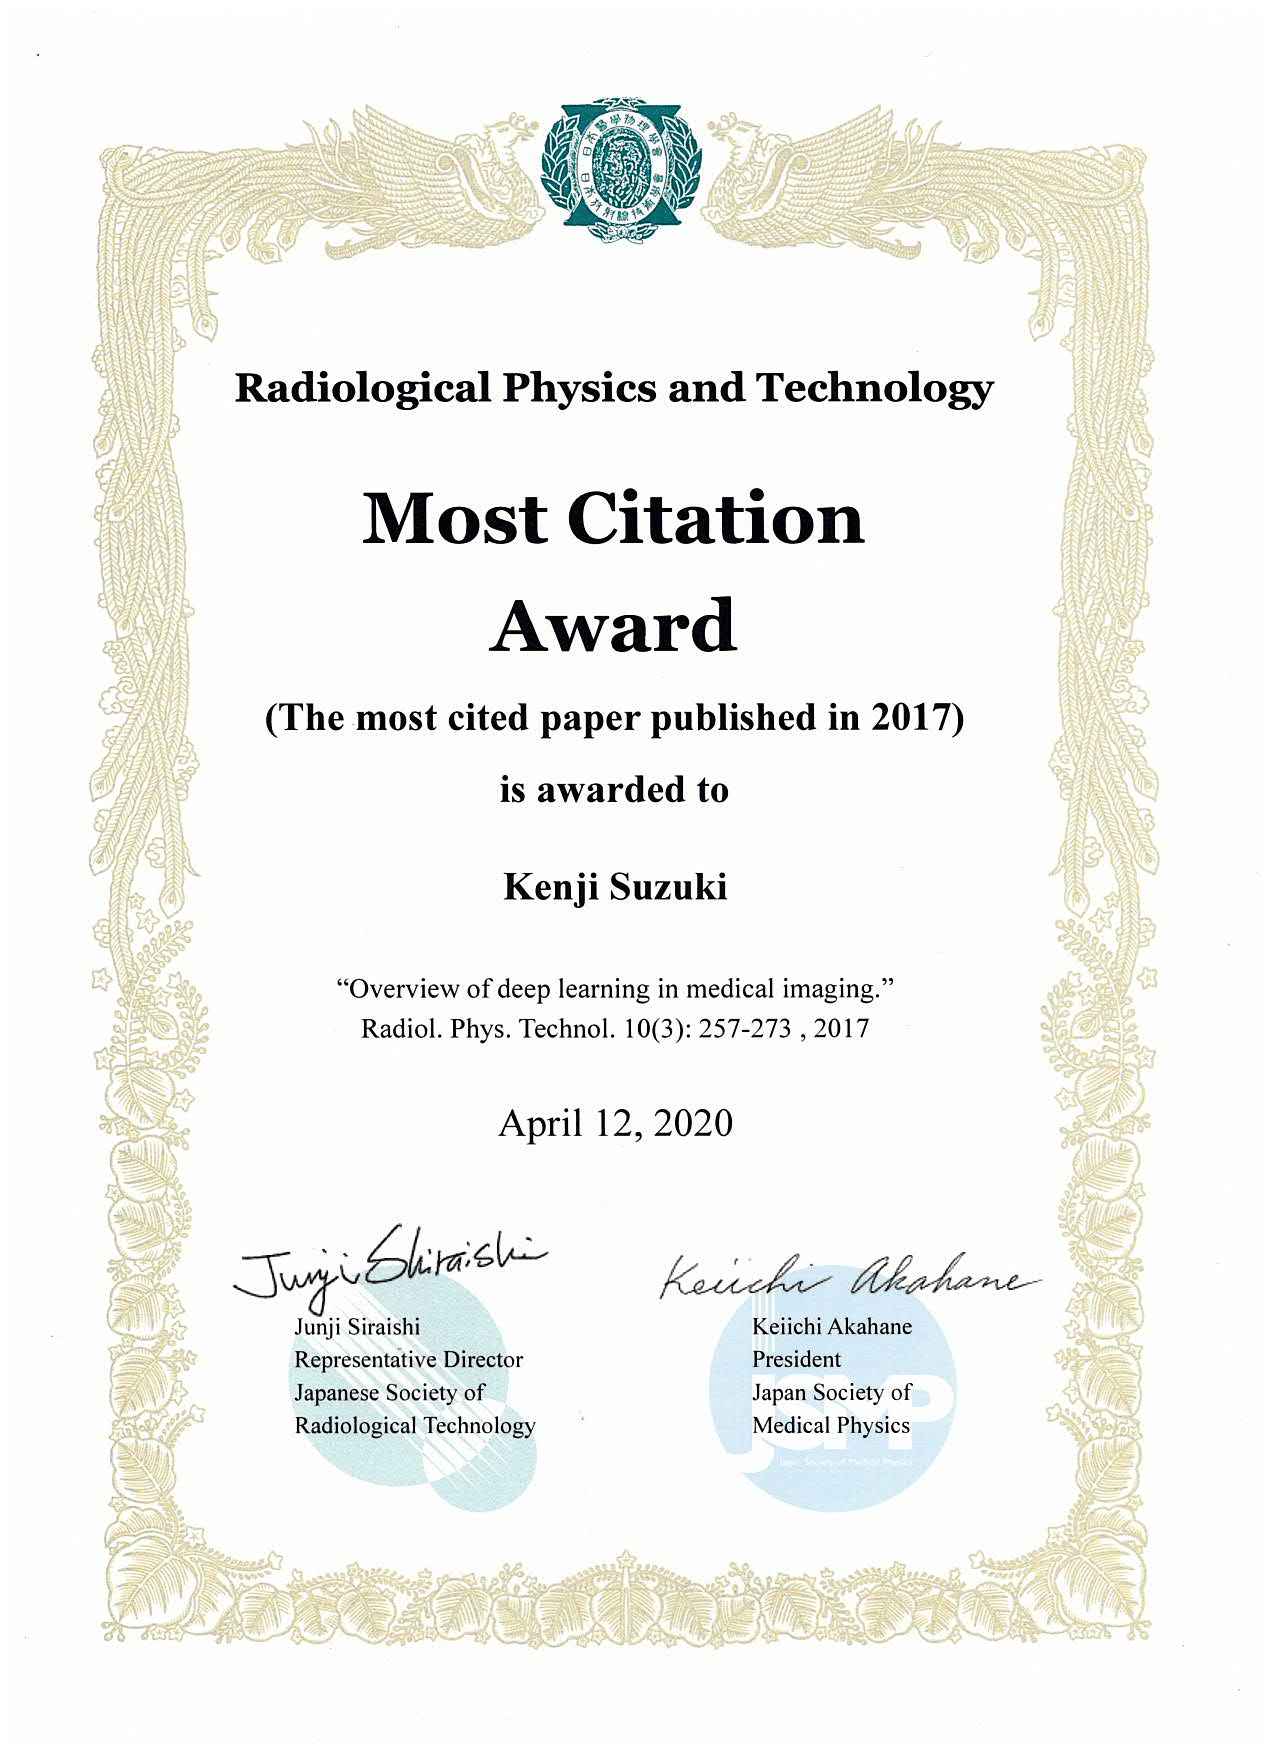 Dr. Suzuki has received The Most Citation Award